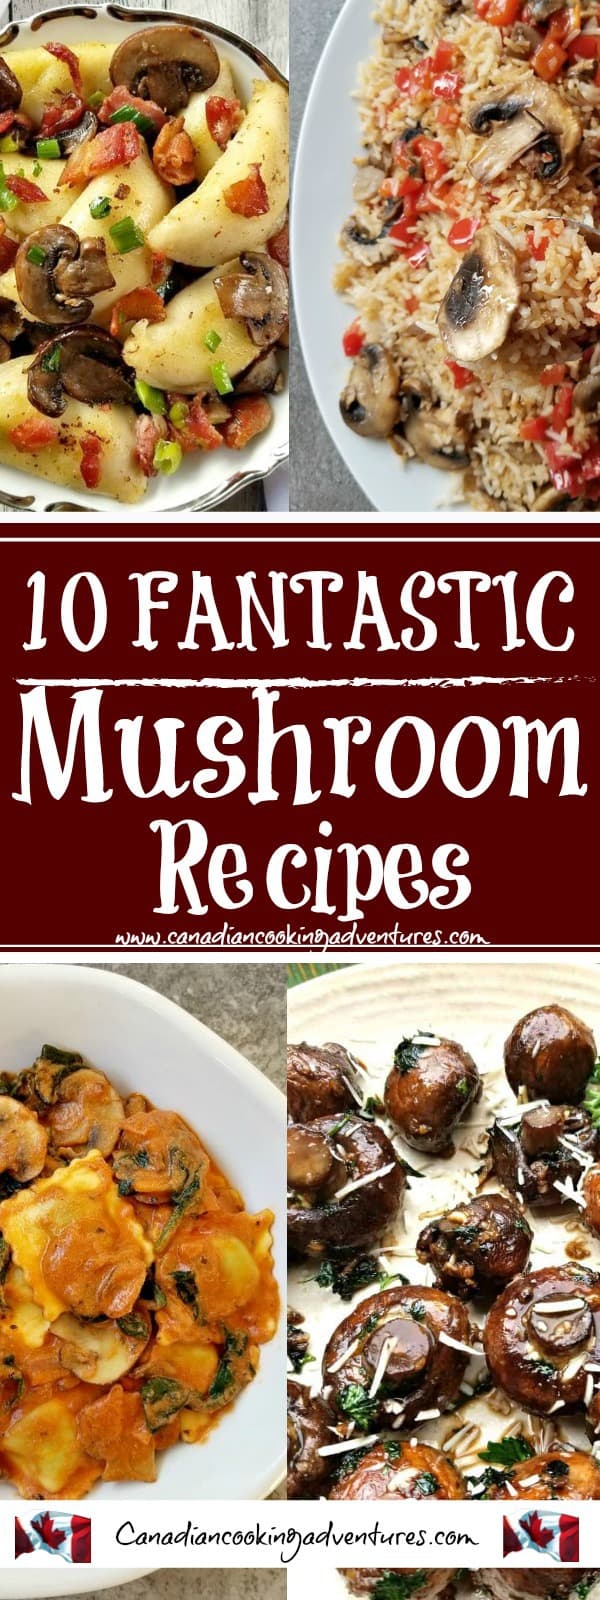 10 Fantastic Mushroom Recipes